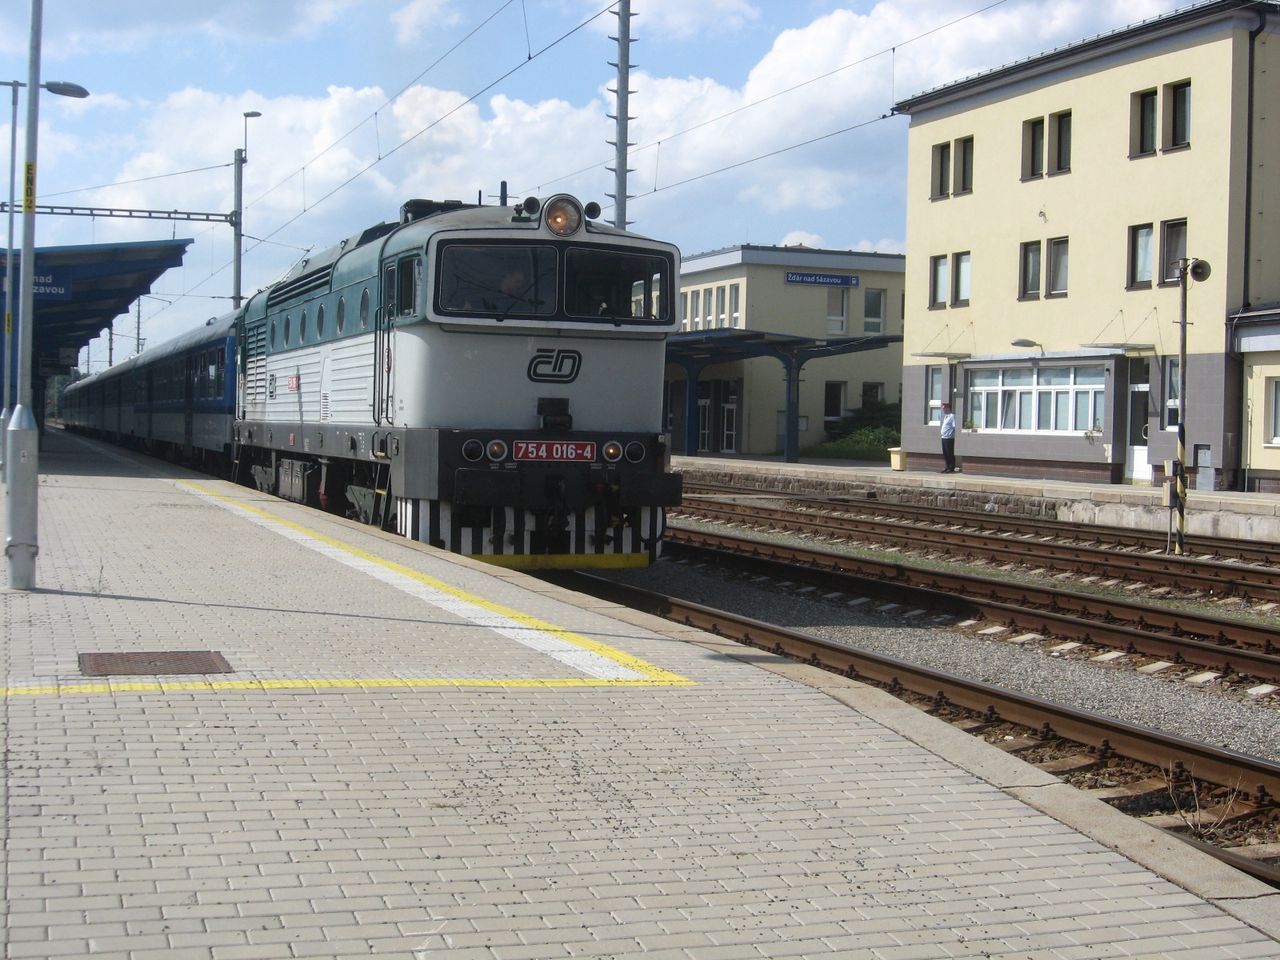 754.016 na Sp 1637 Perntejn odjd ze stanice r nad Szavou.